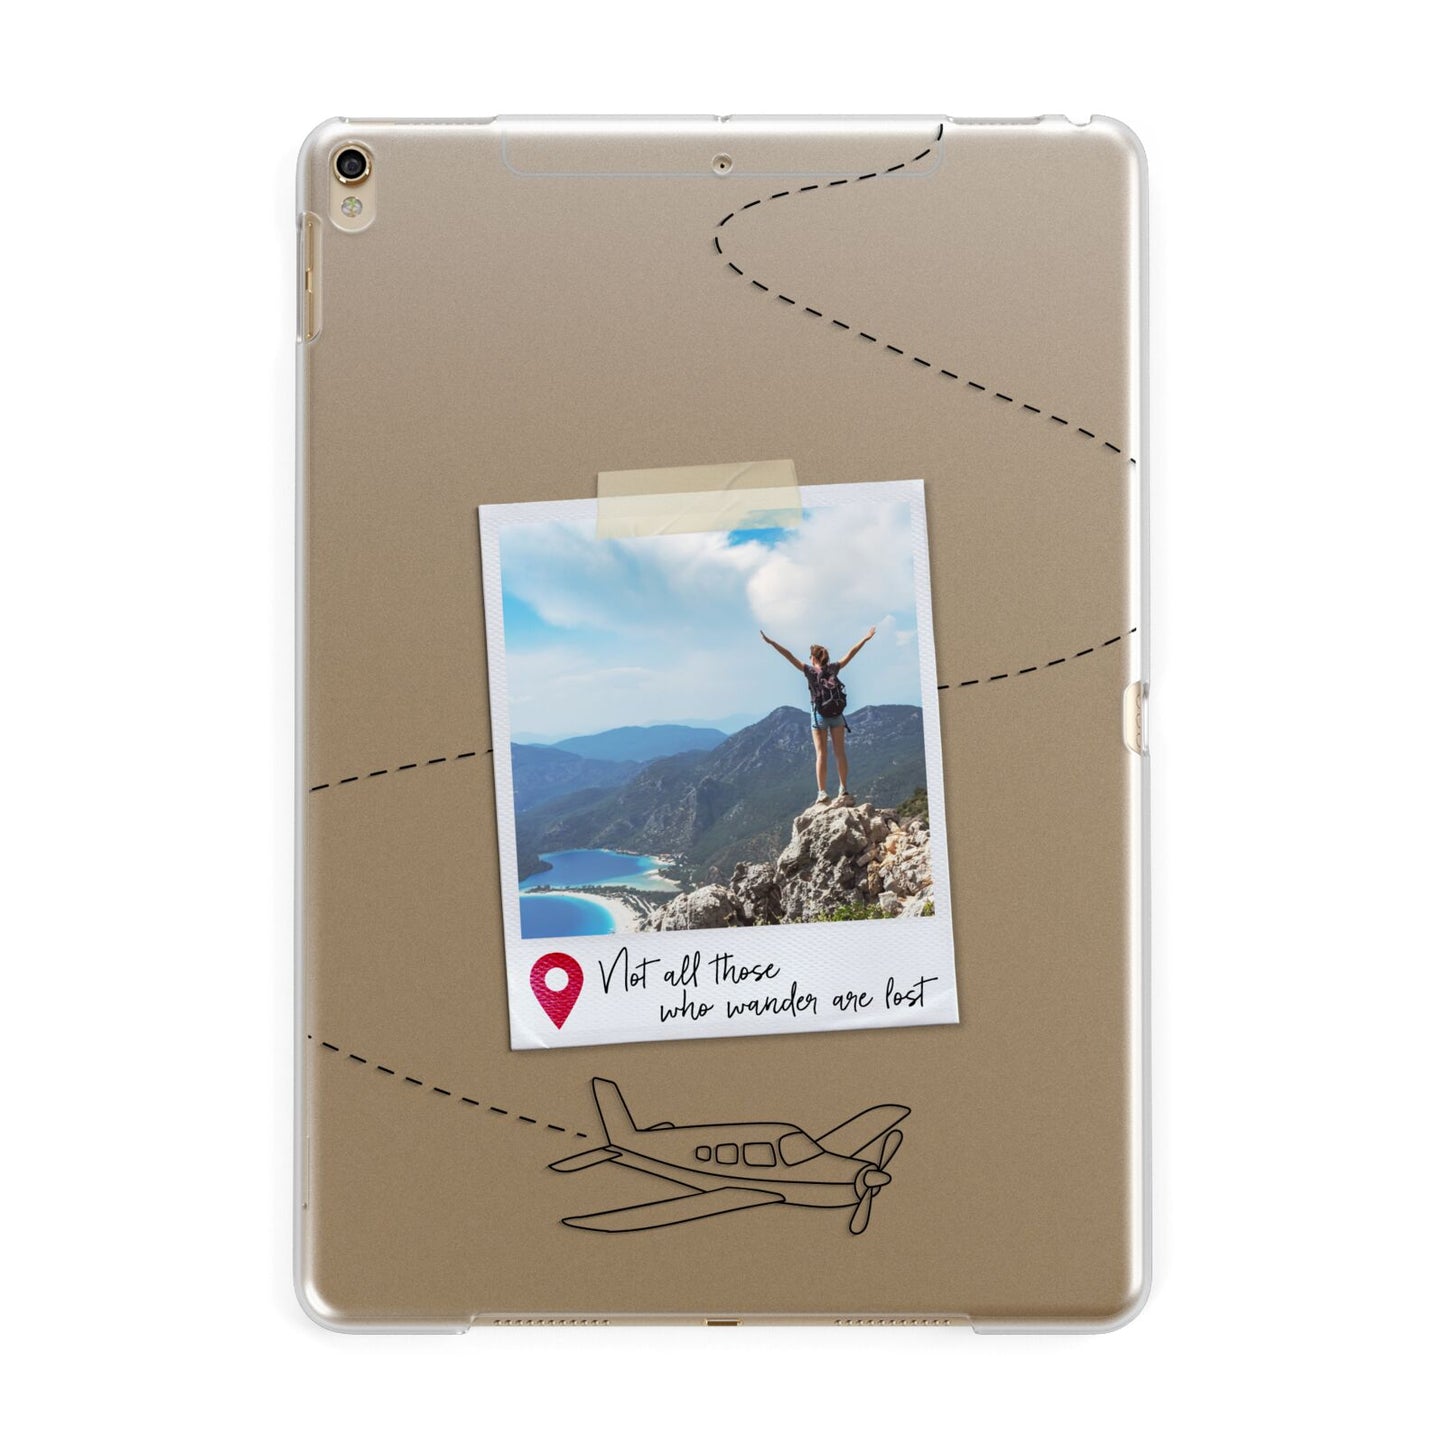 Backpacker Photo Upload Personalised Apple iPad Gold Case